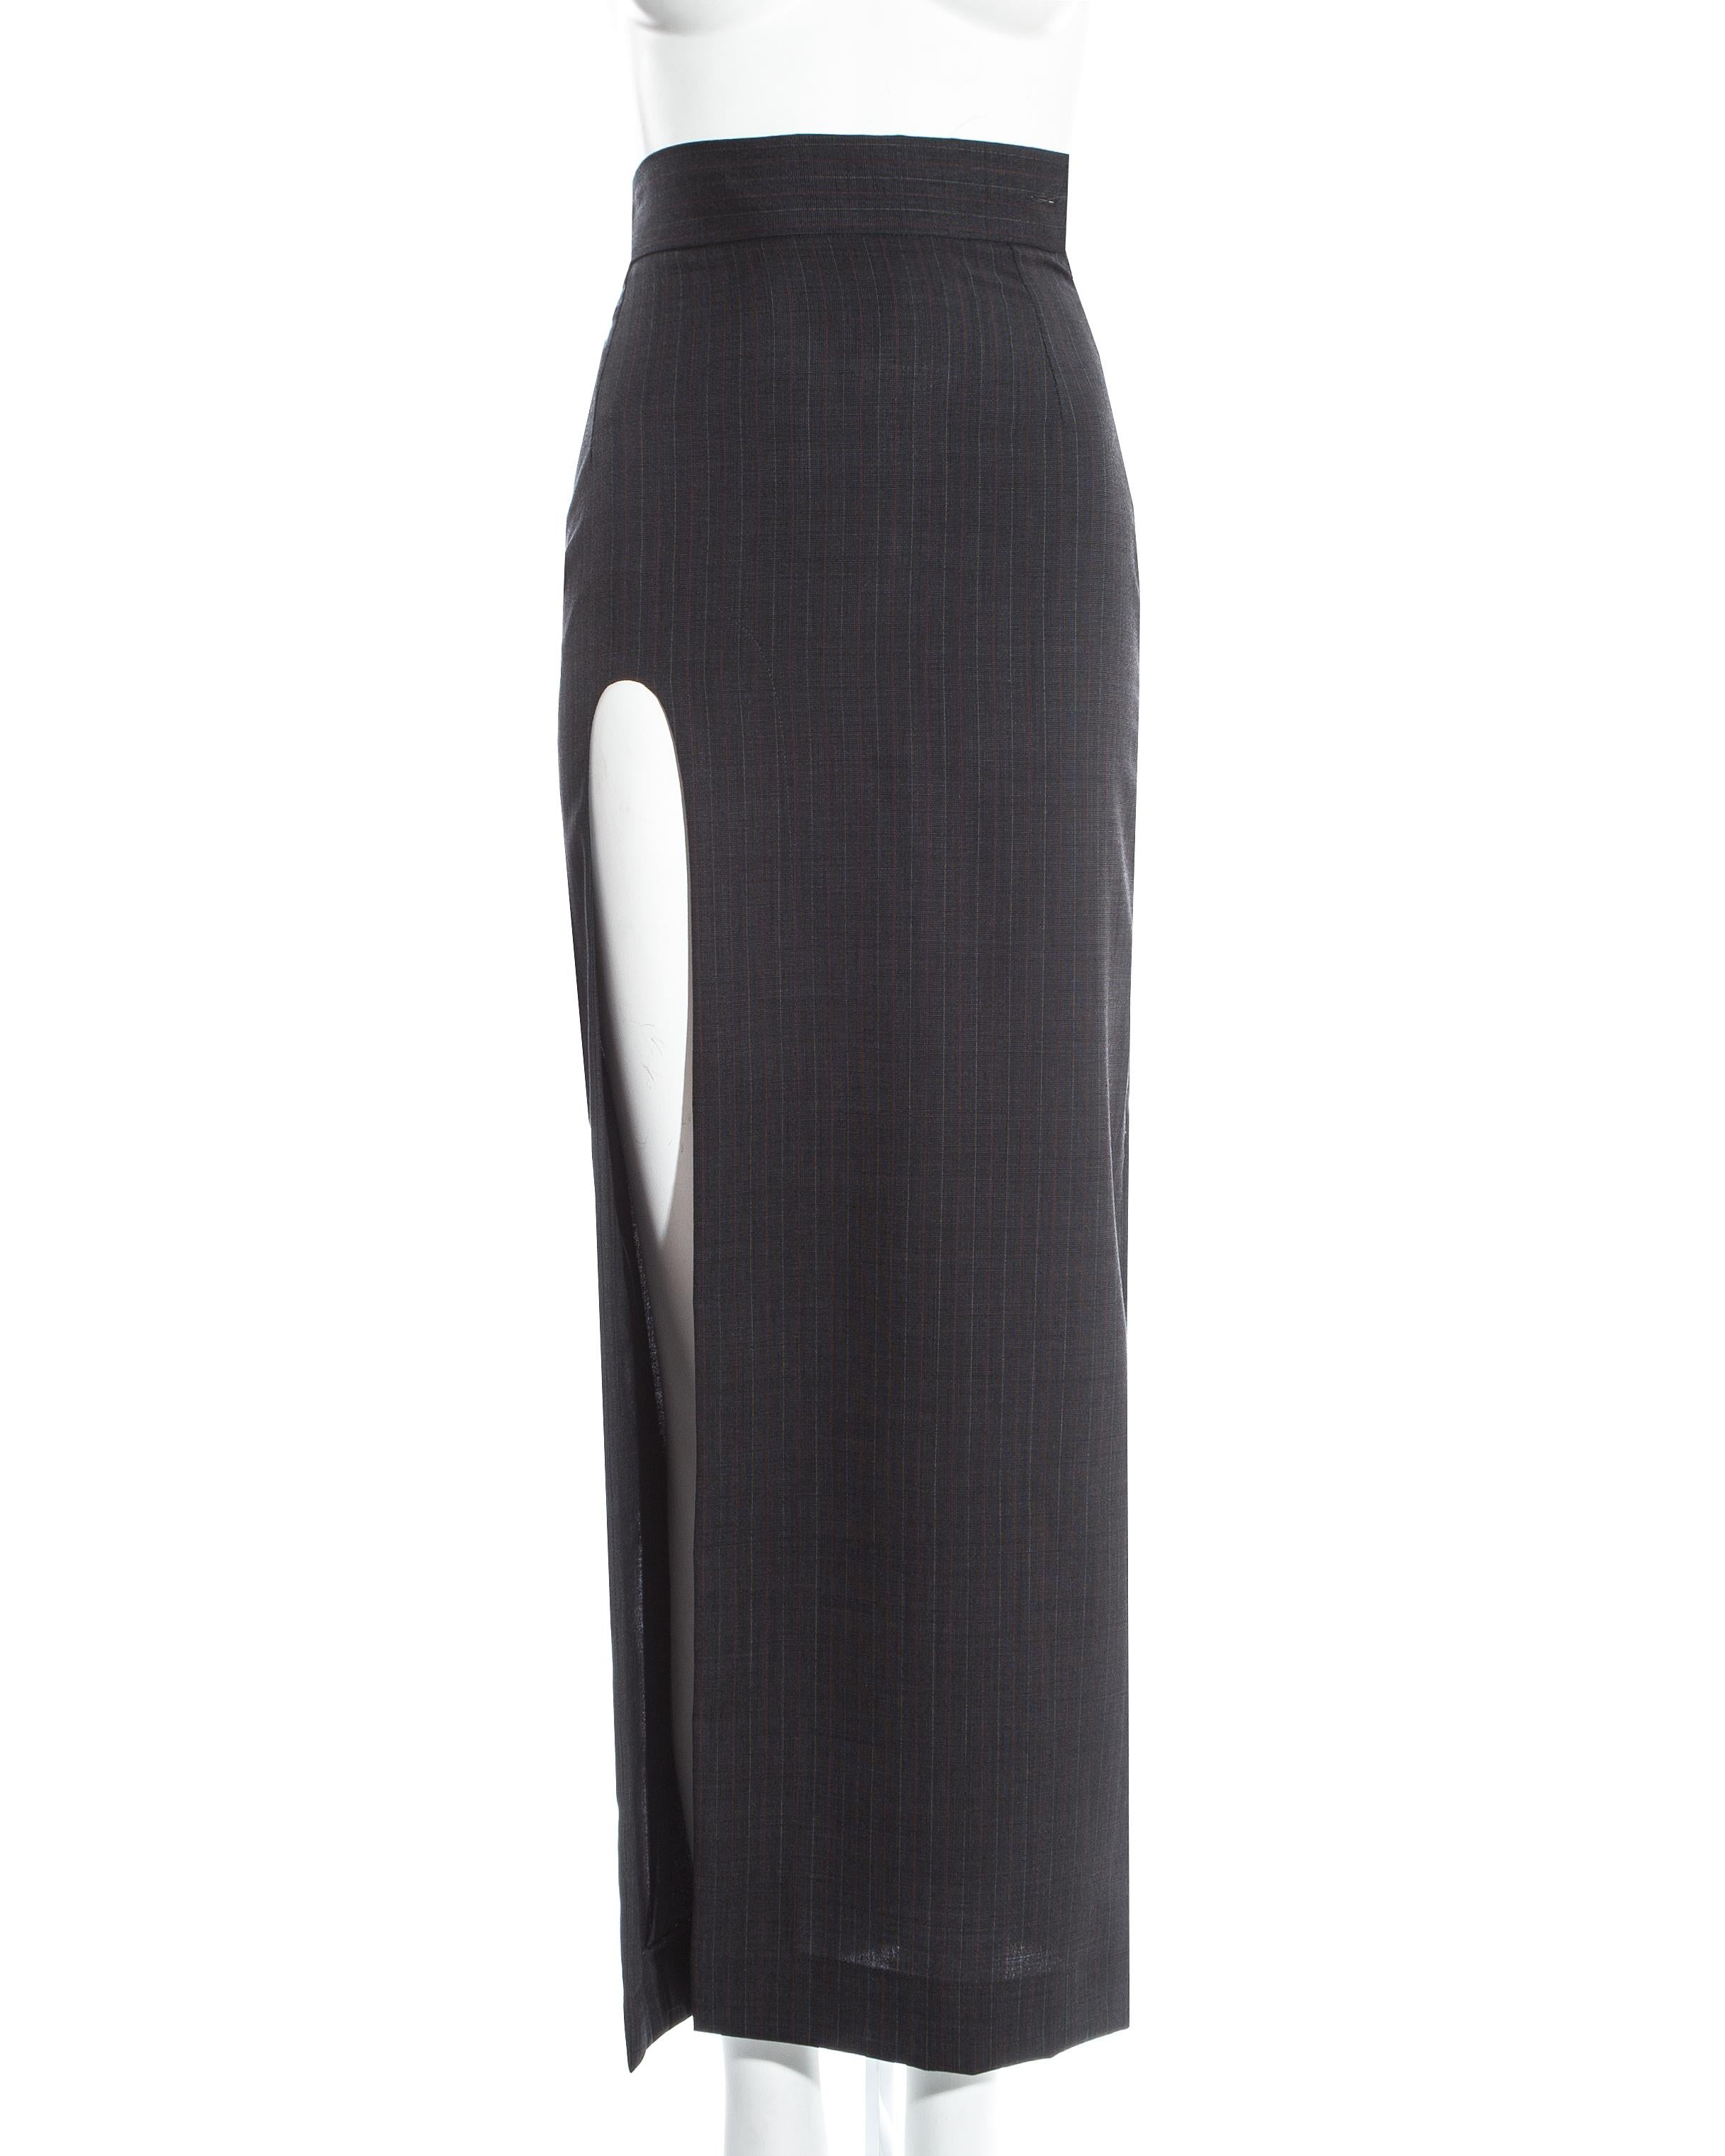 Vivienne Westwood grey pinstripe fitted skirt with high leg slit.

'Civilizade' Spring-Summer 1989